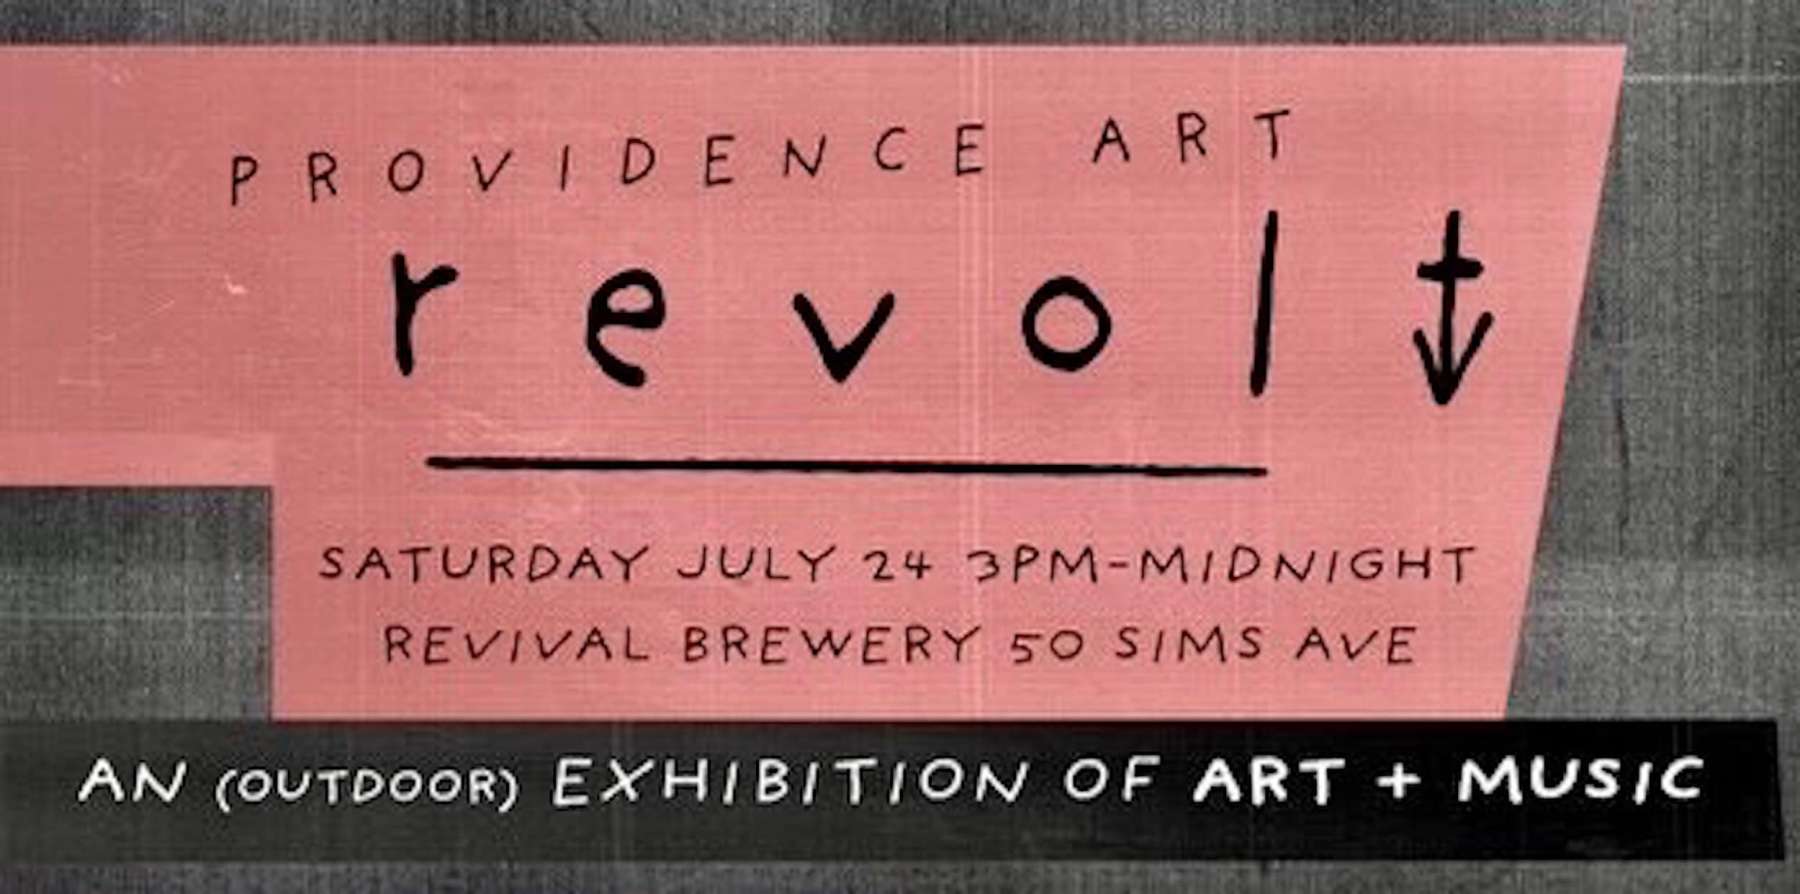 Rhode Island News: Art Revolt at Revival Brewery this Saturday